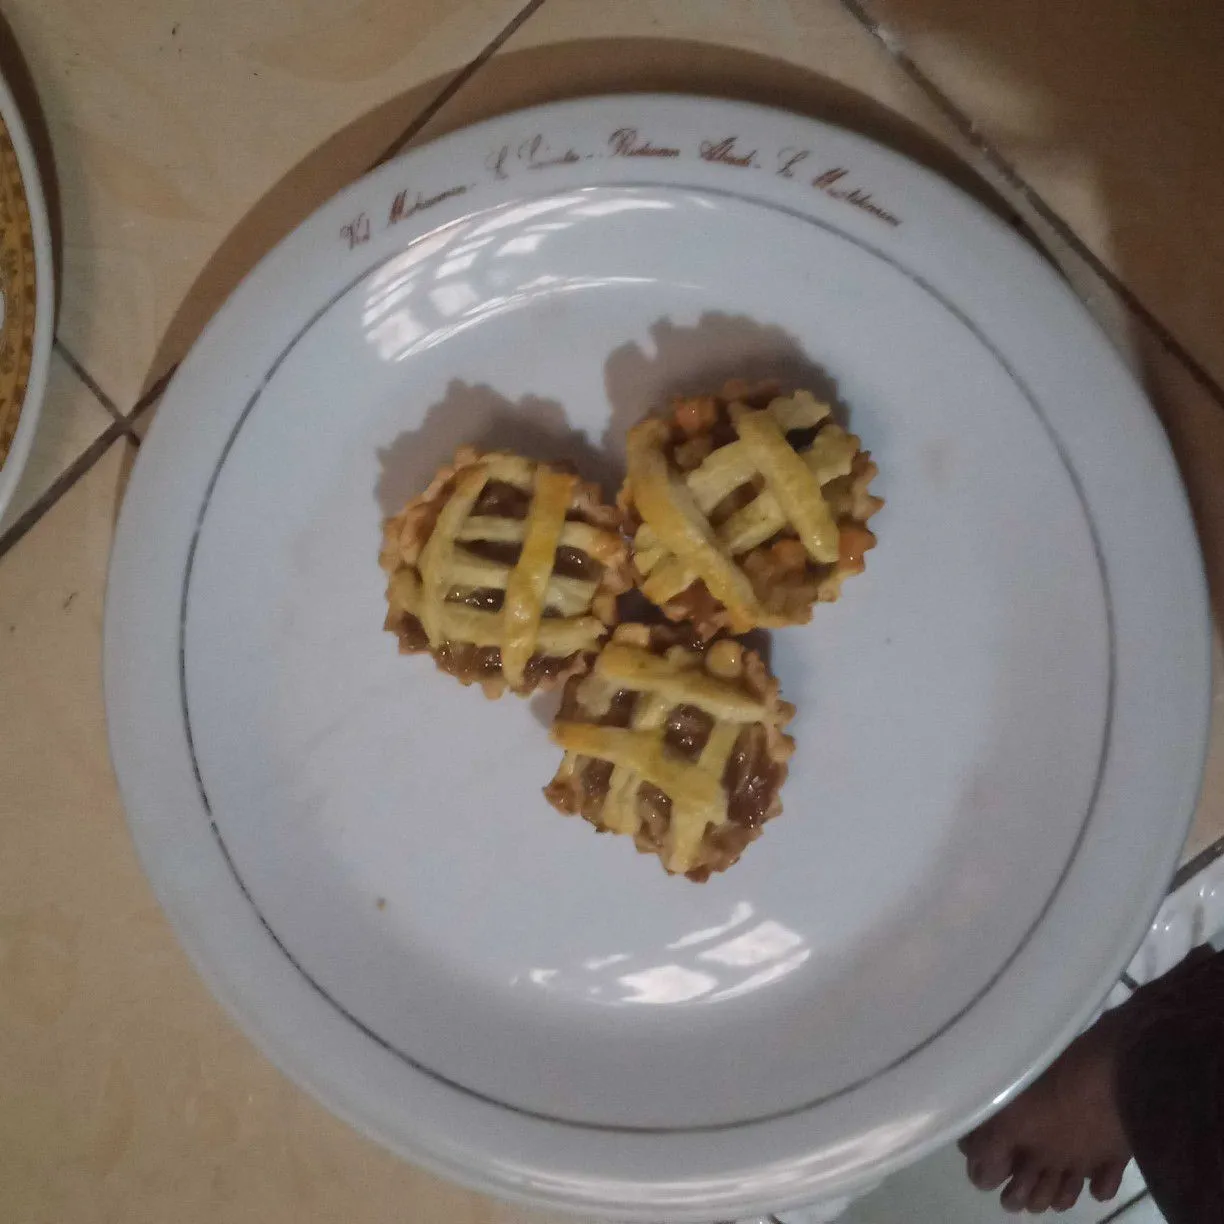 Apel Pie #JagoMasakMinggu2Periode3